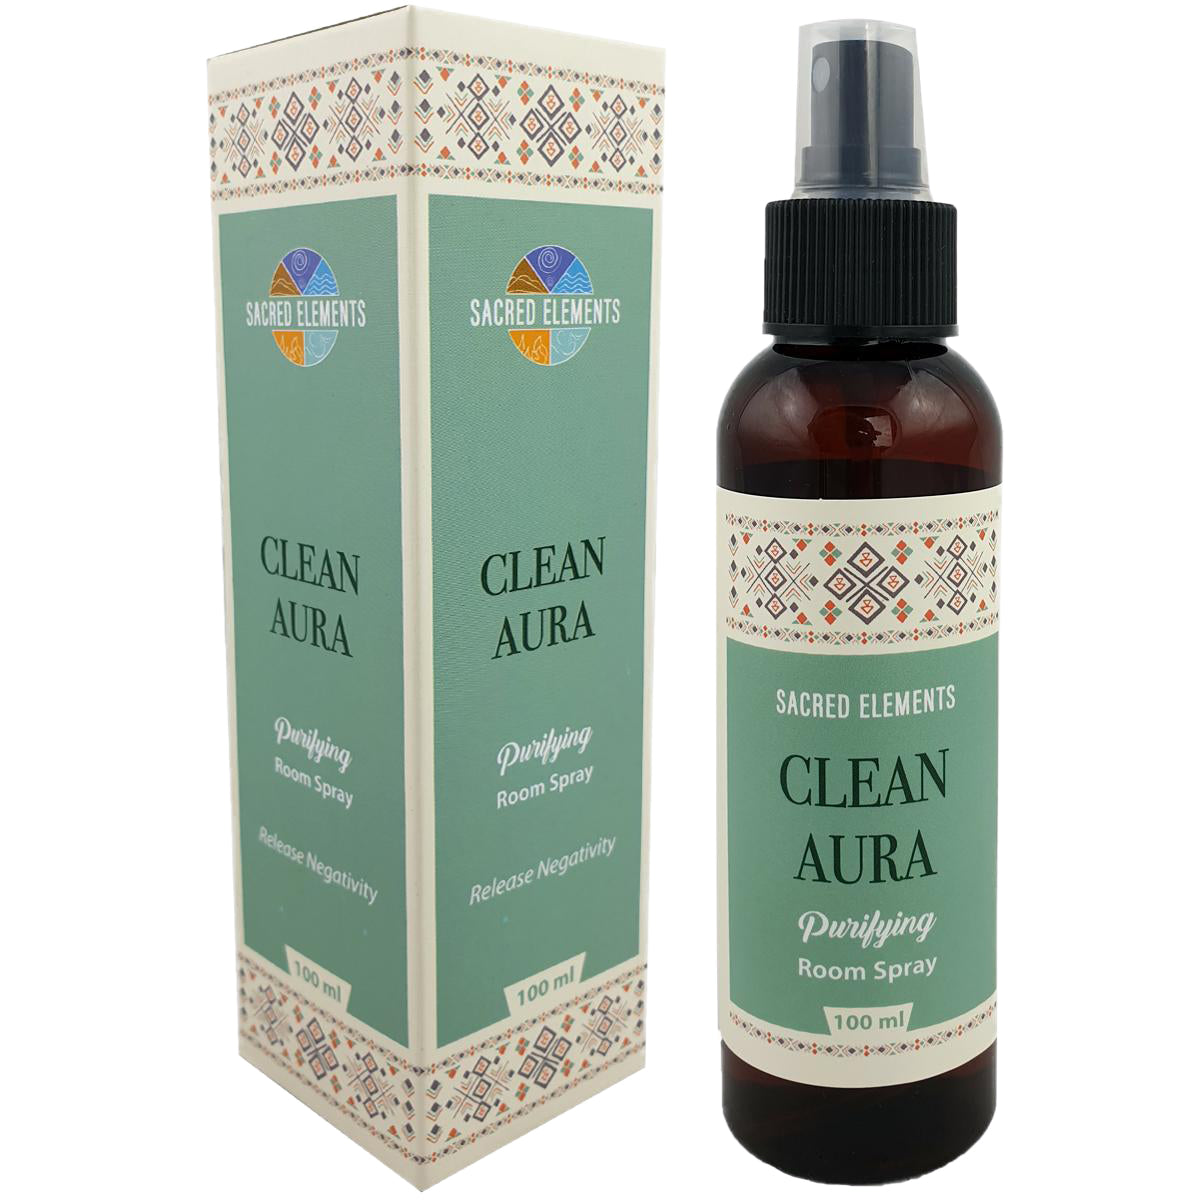 Clean Aura Room Spray Sacred Elements